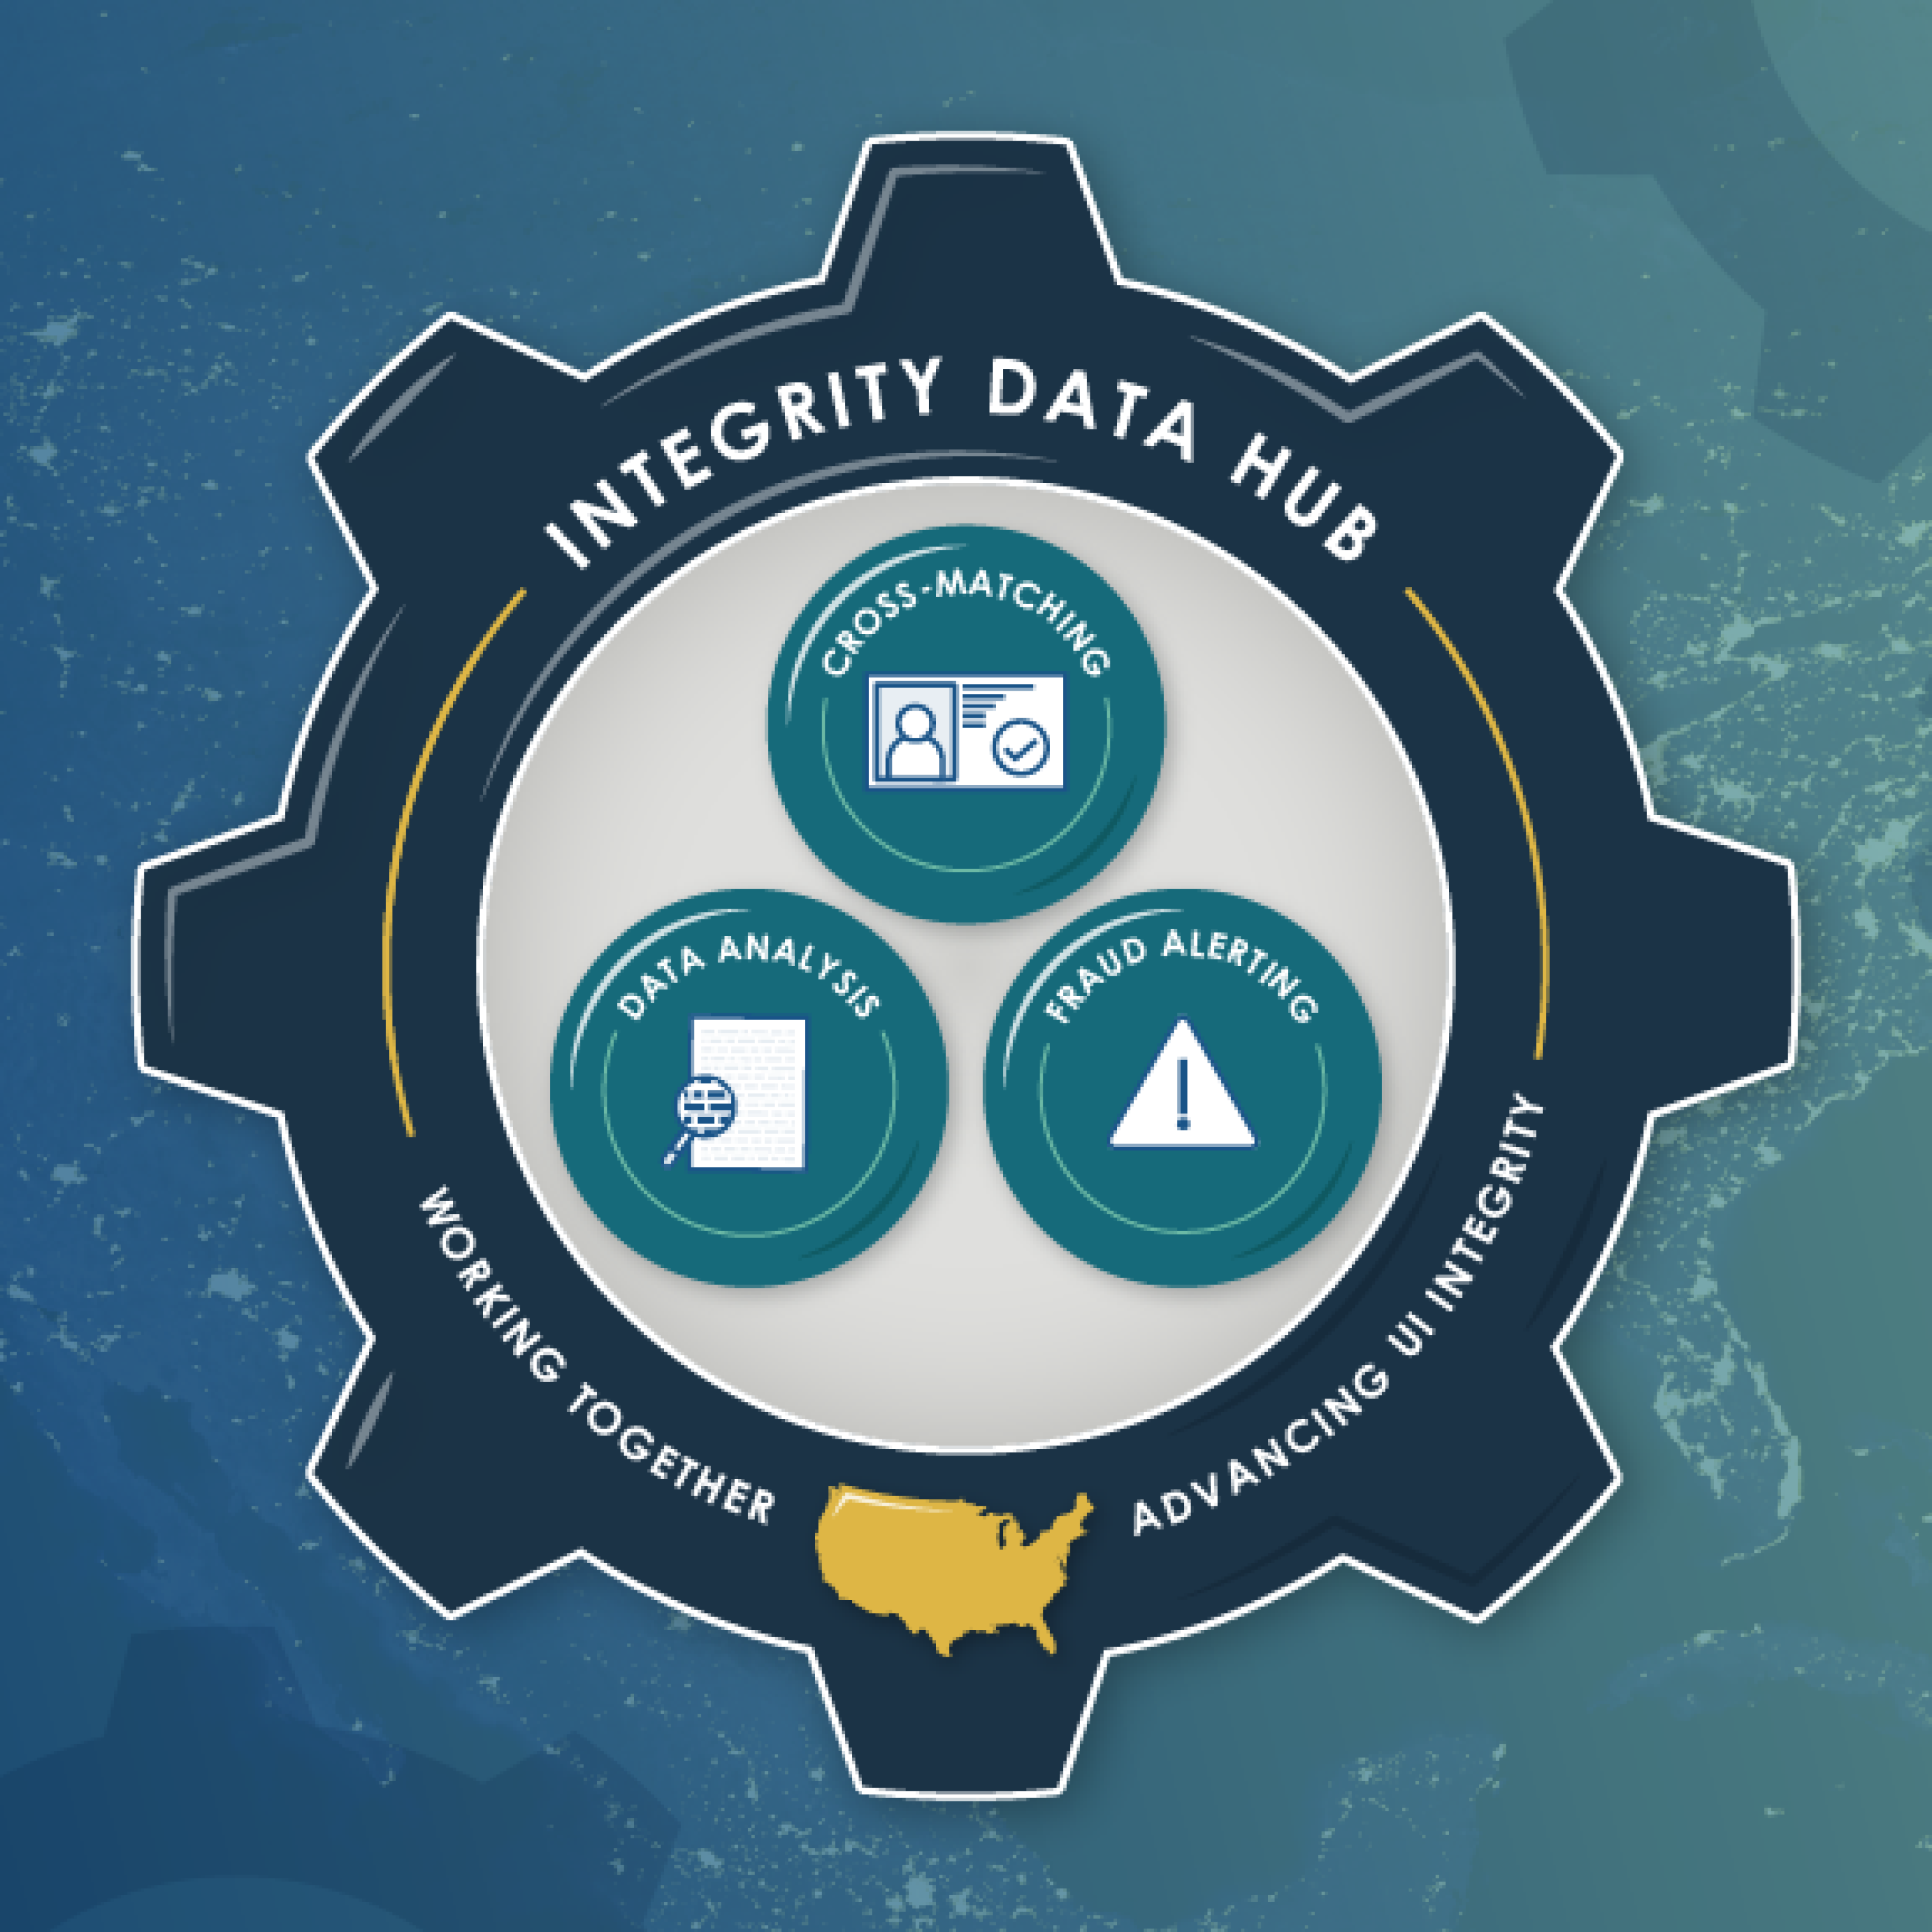 Integrity Data Hub, Working Together, Advancing UI Integrity